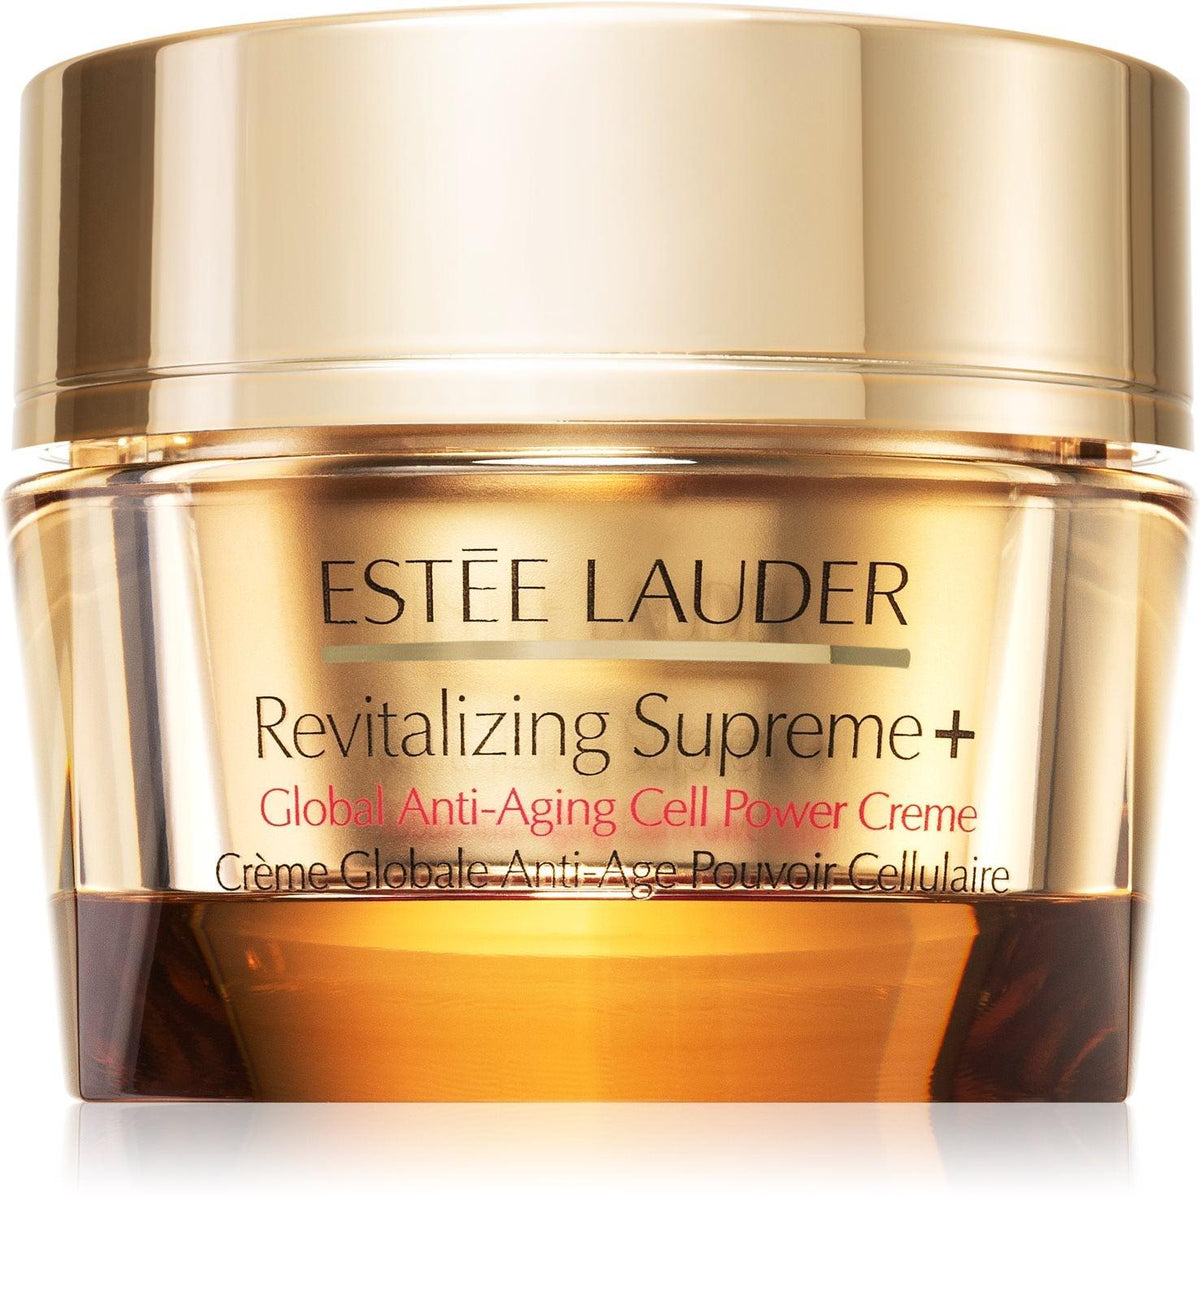 Estee Lauder Revitalizing Supreme + Global Anti-Aging Cell Power Creme - Perfume Oasis